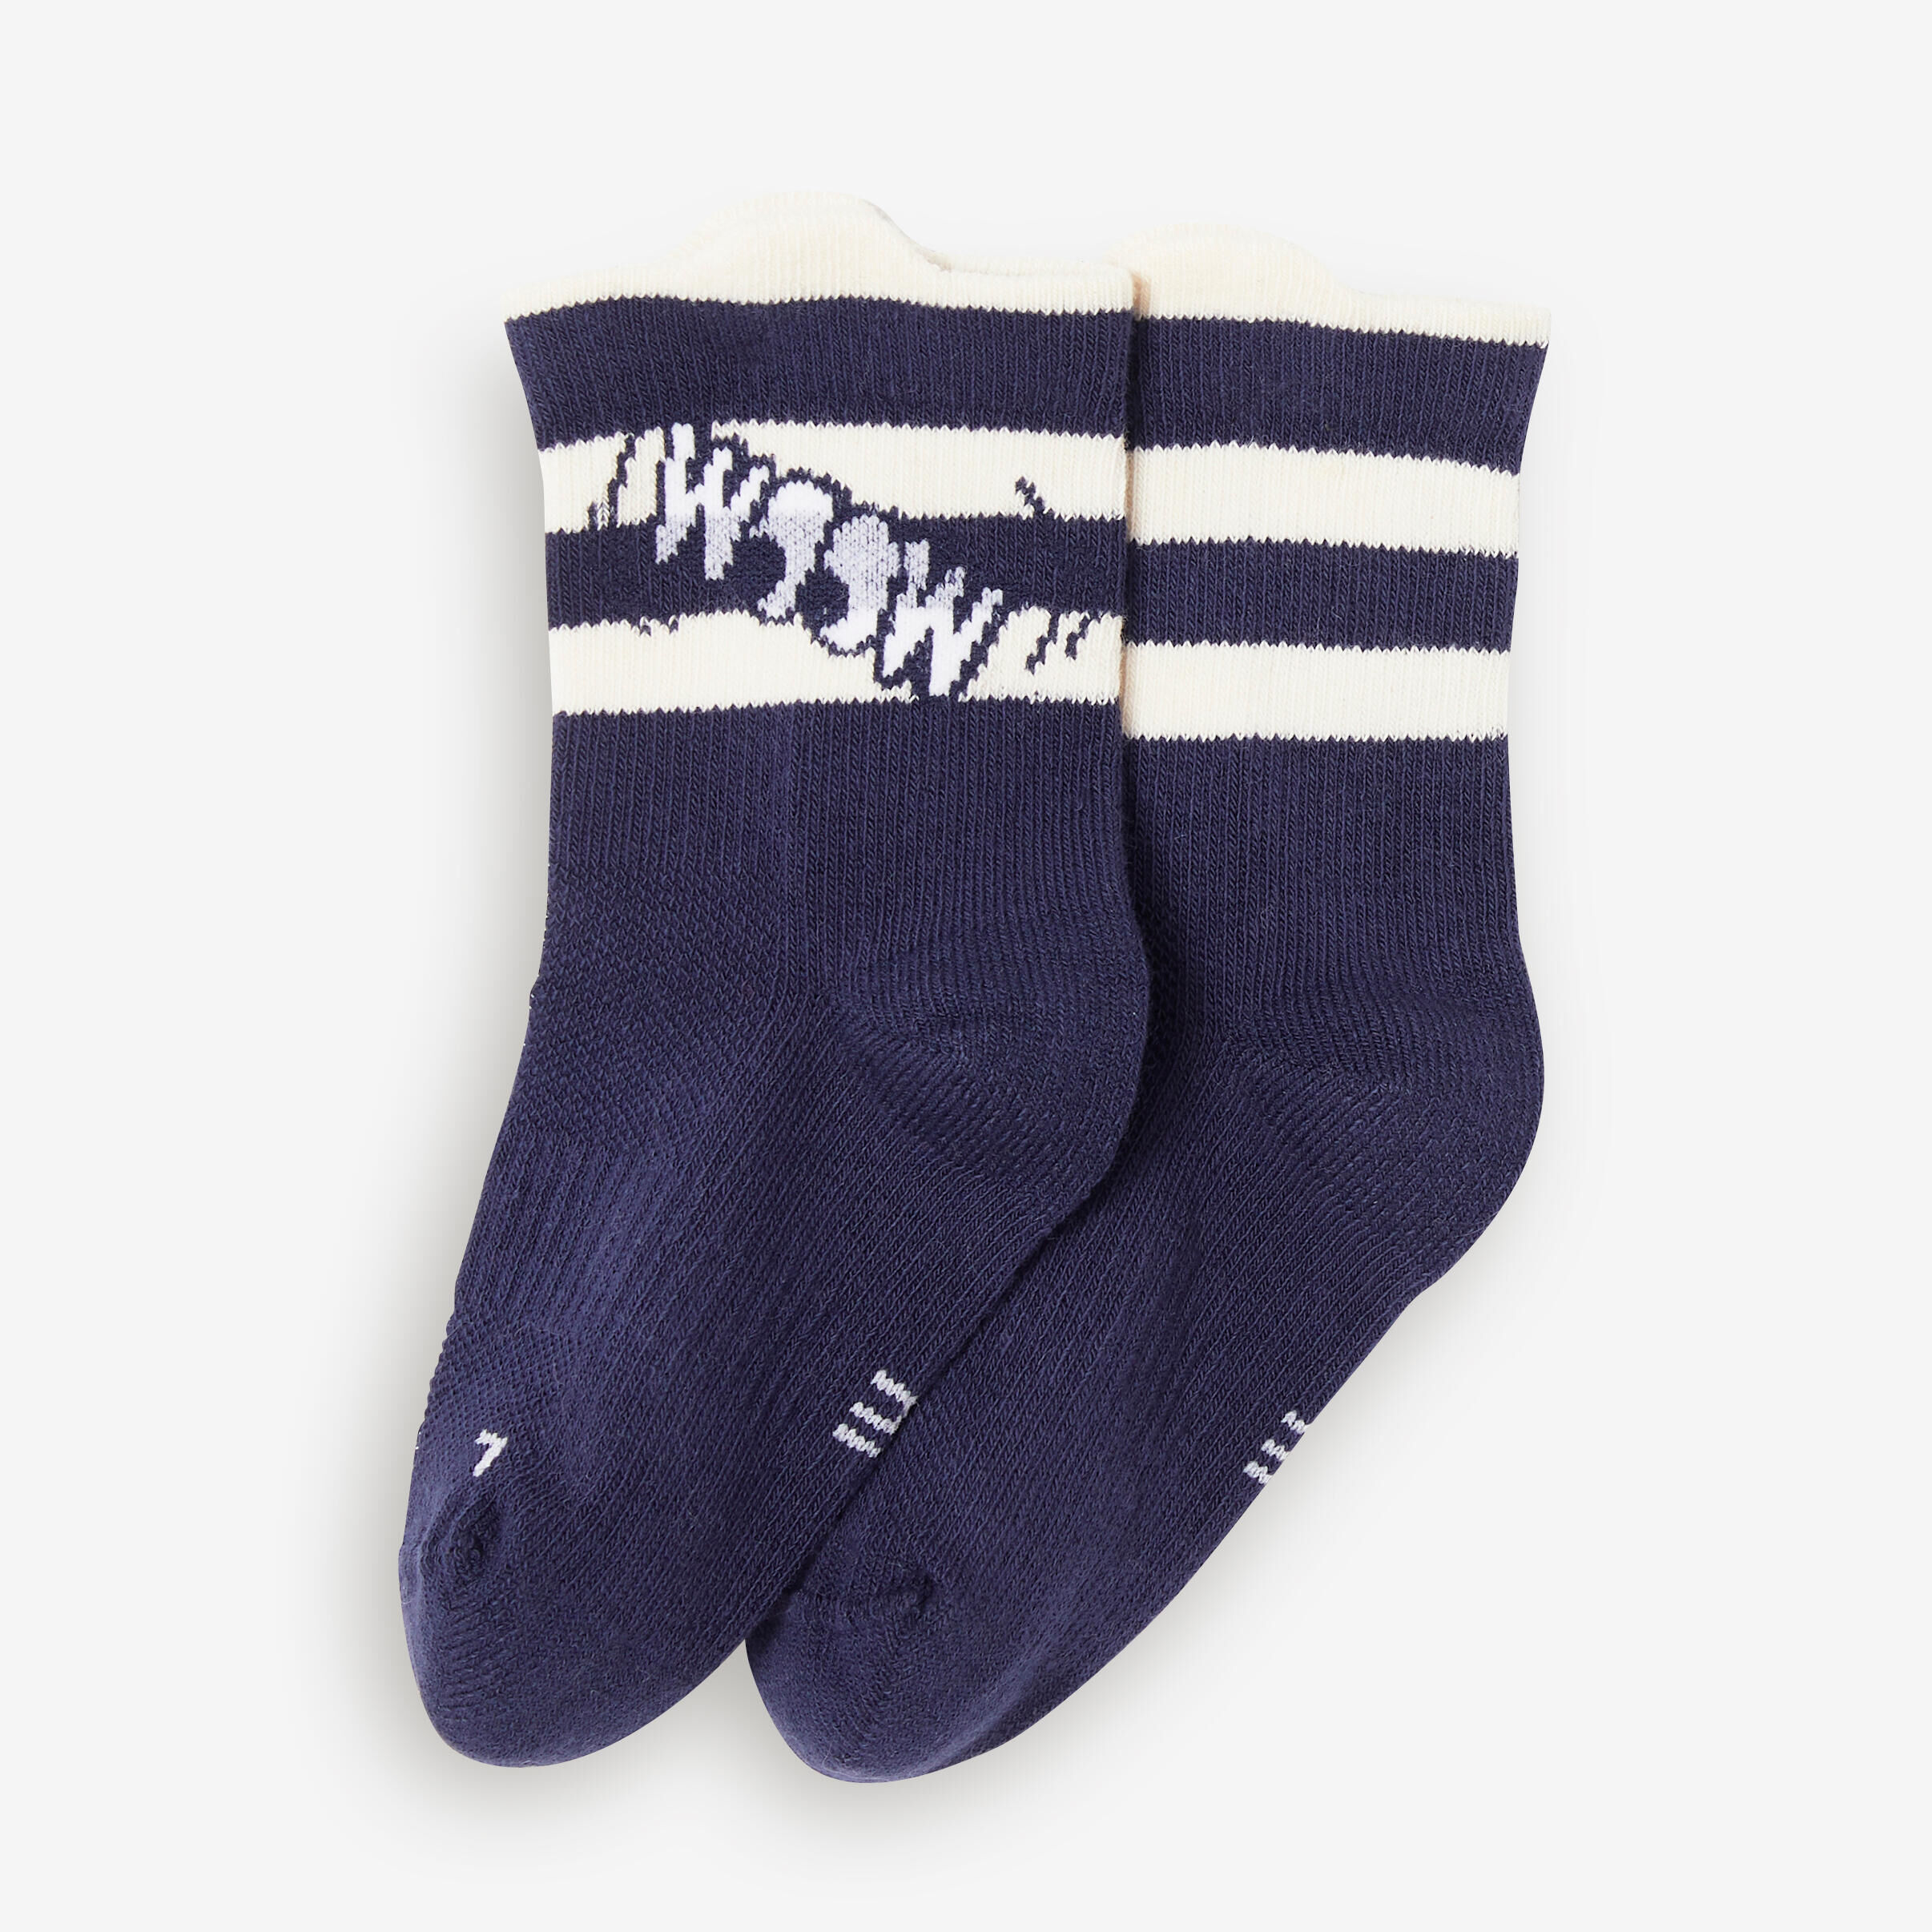 DOMYOS Kids' Non-Slip Mid-High Socks 600 - Blue with Pattern